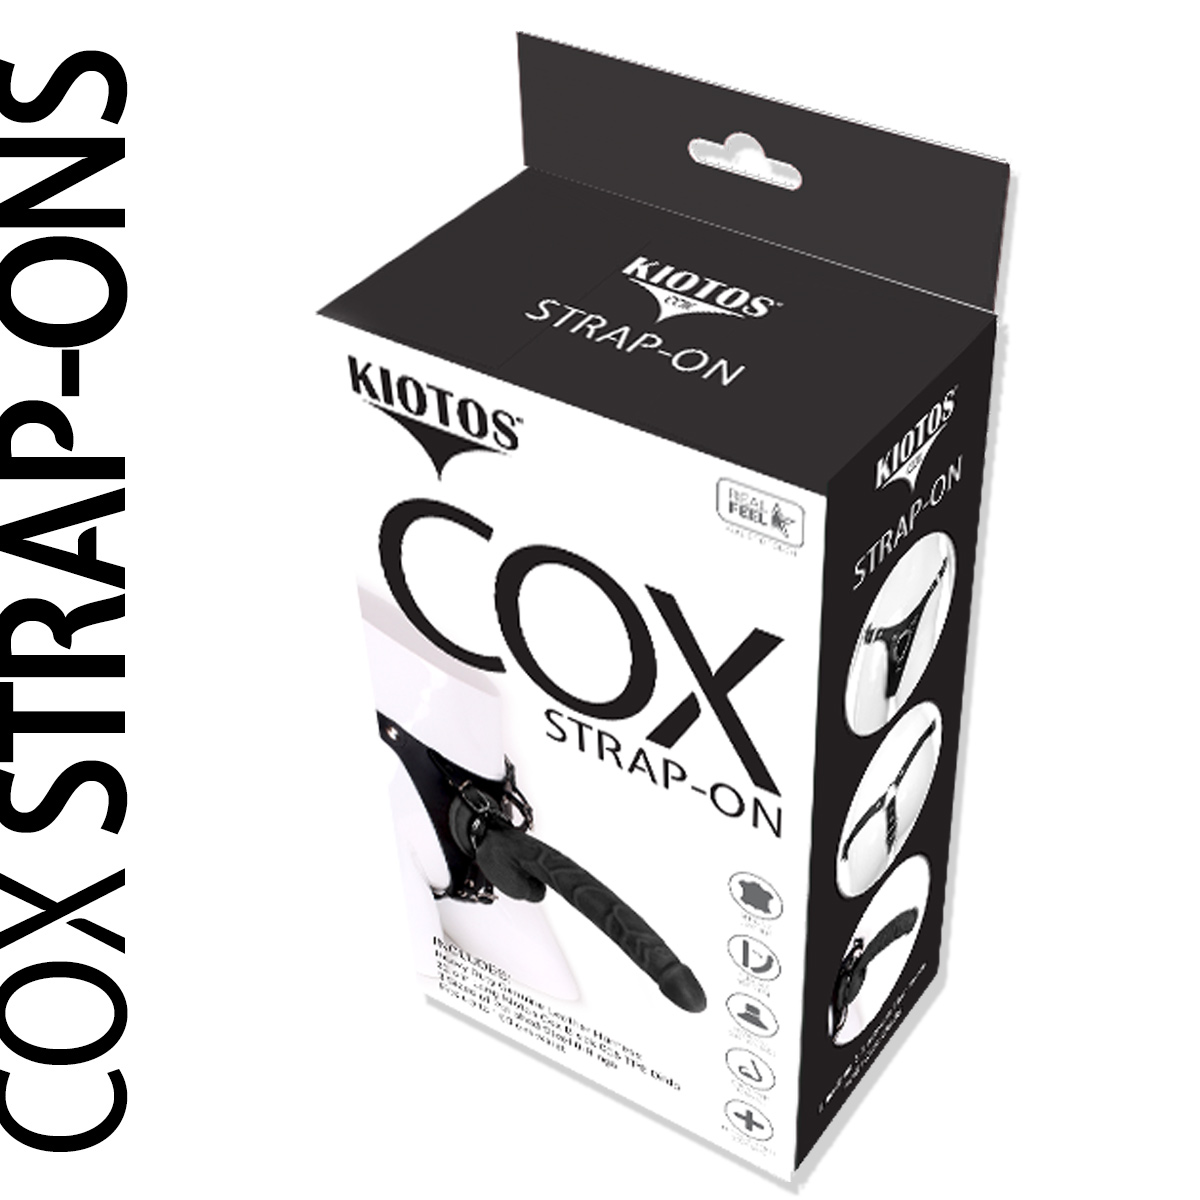 Kiotos-COX-Strap-On-Dildo-Black-008-OPR-307905-4